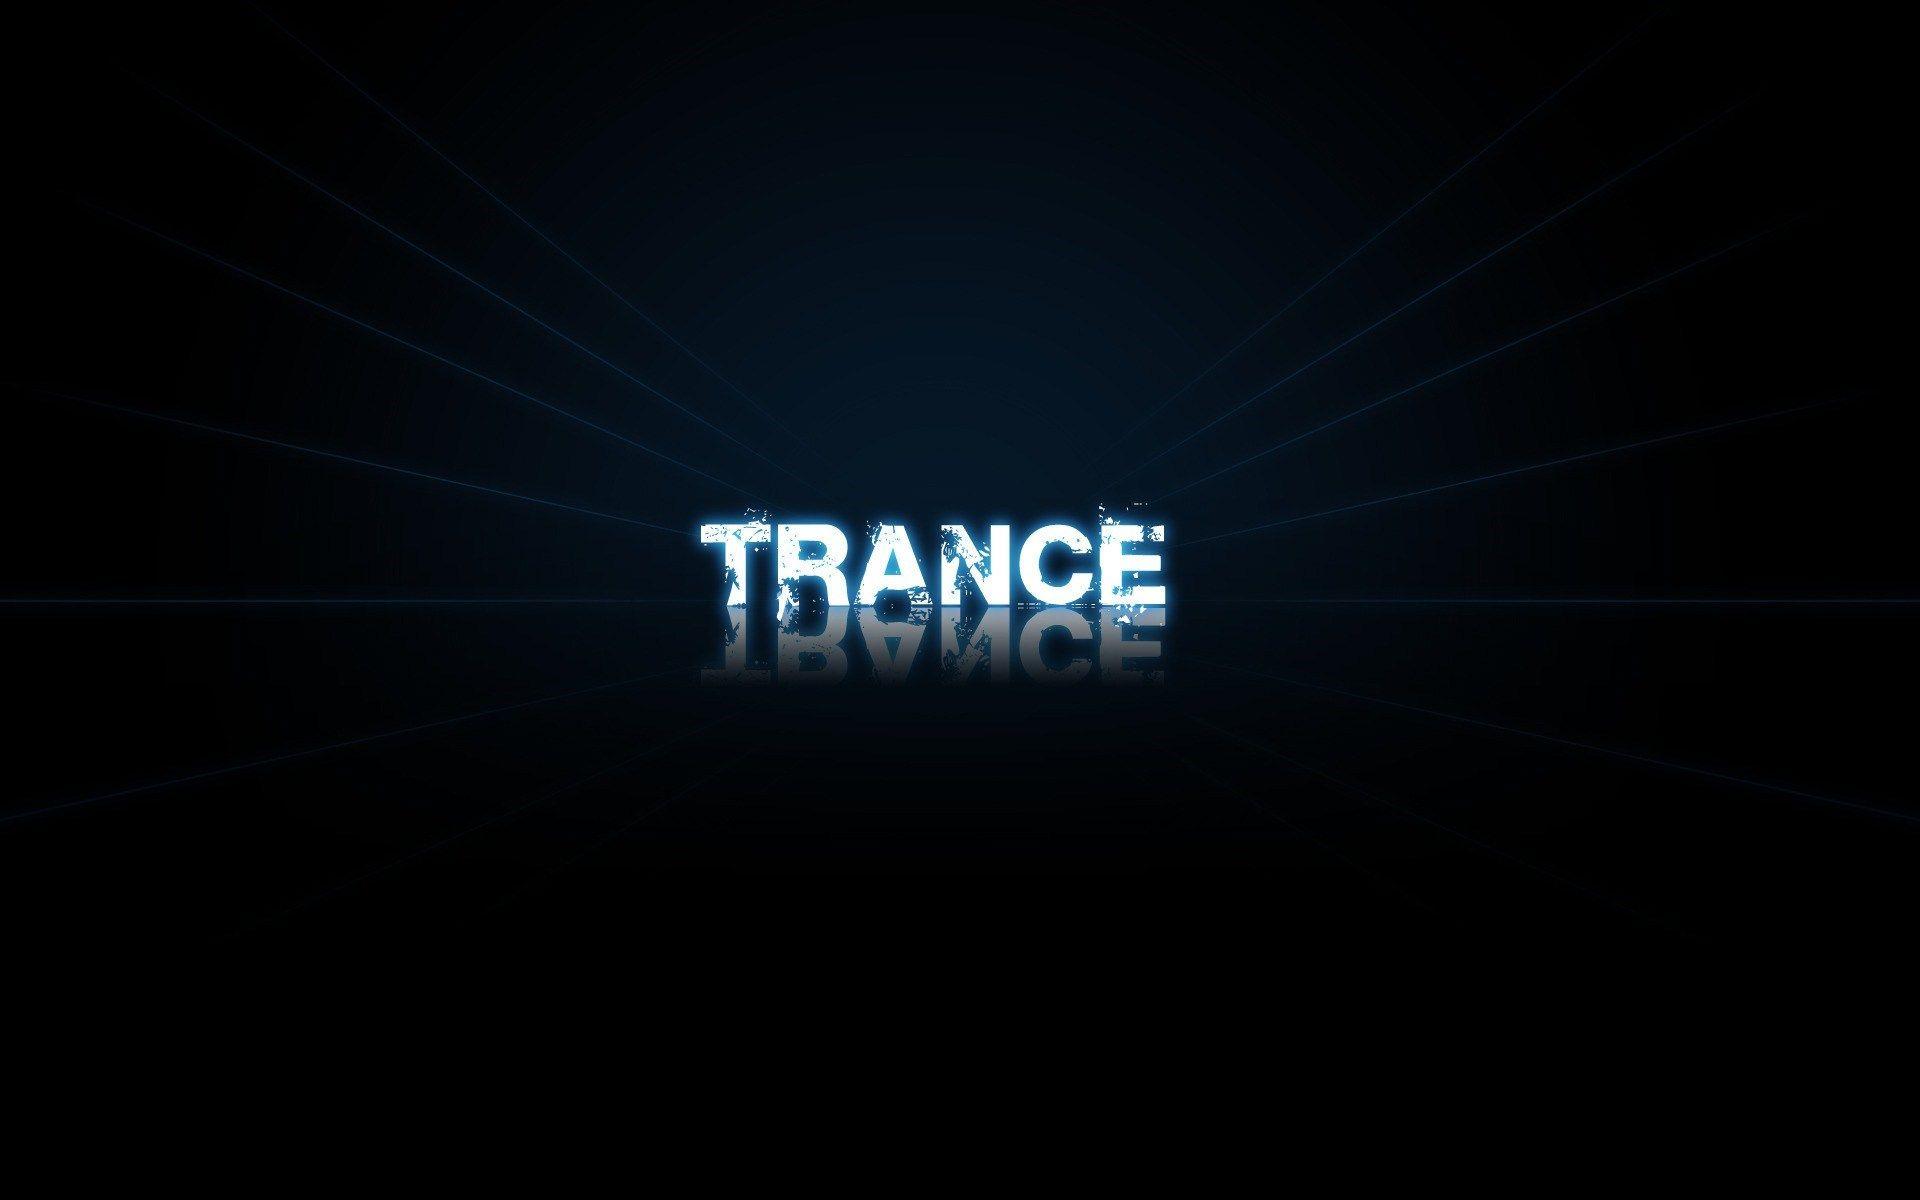 Trance Music Typography Desktop Wallpaper